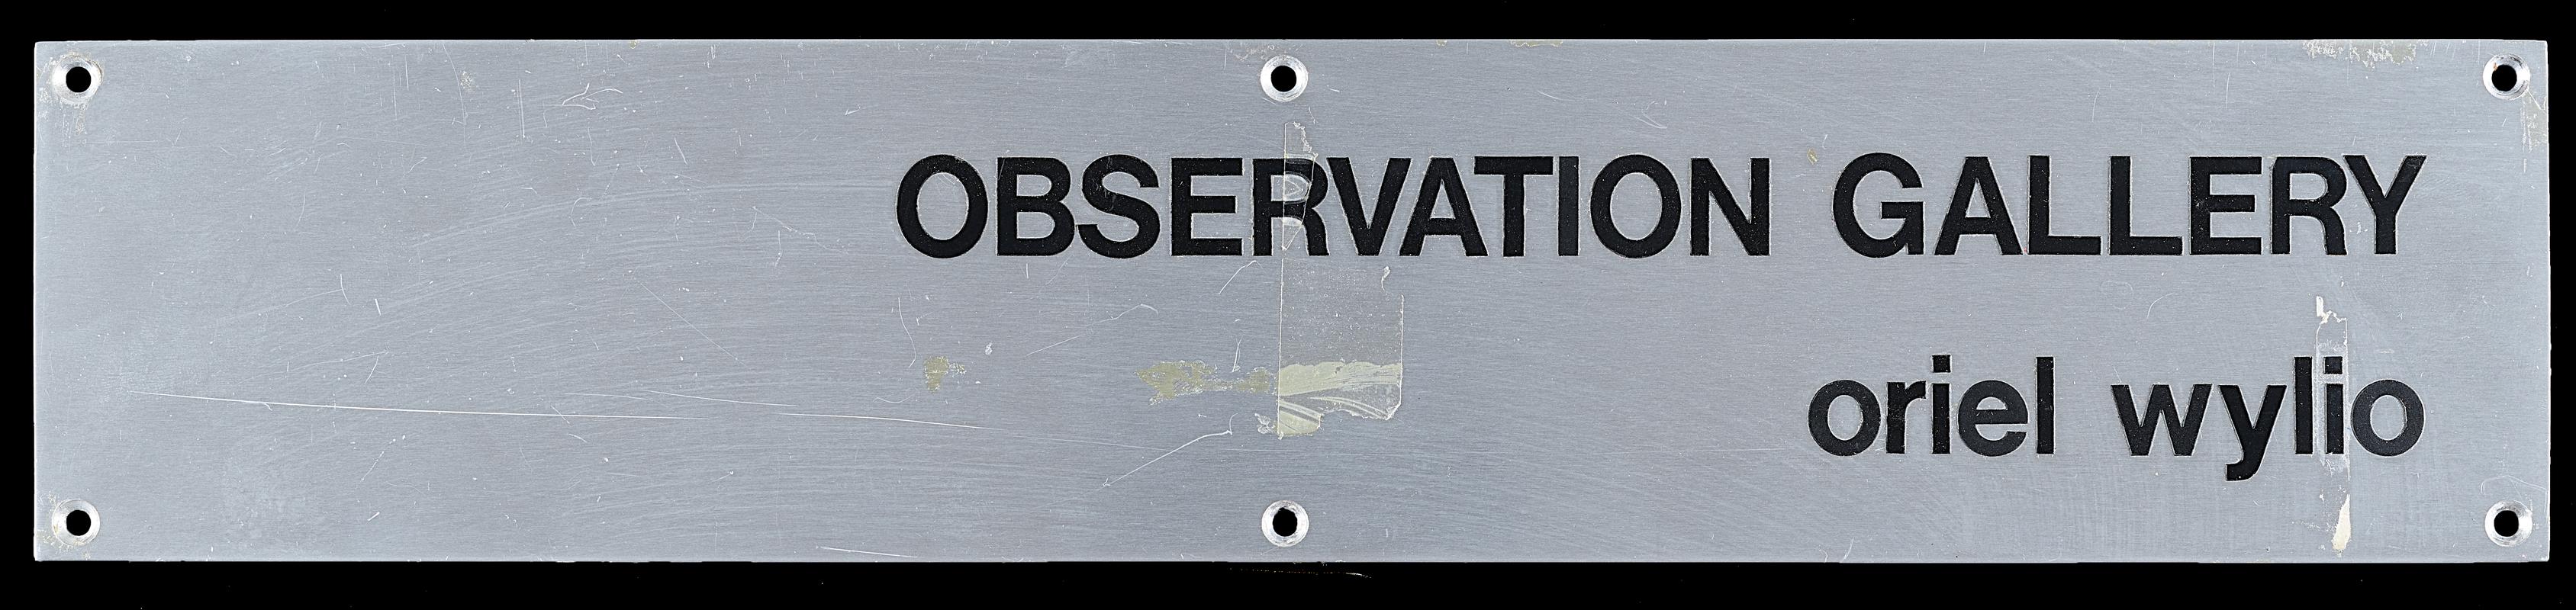 sign: observation gallery / oriel wylio